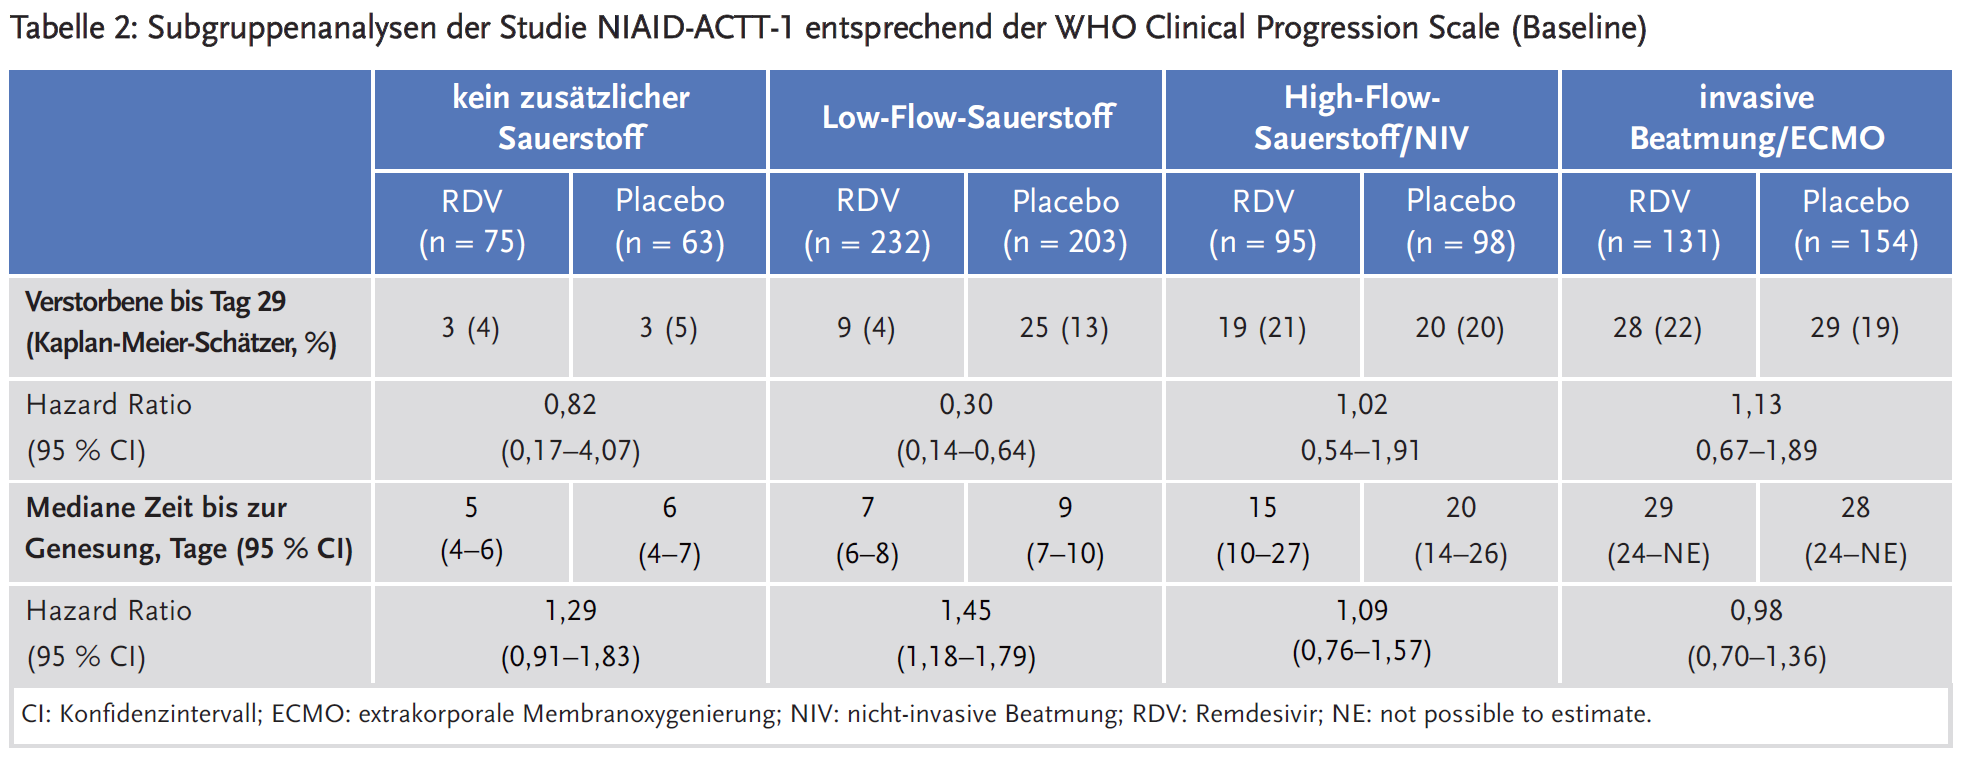 Tabelle 2: Subgruppenanalysen der Studie NIAID-ACTT-1 entsprechend der WHO Clinical Progression Scale (Baseline)